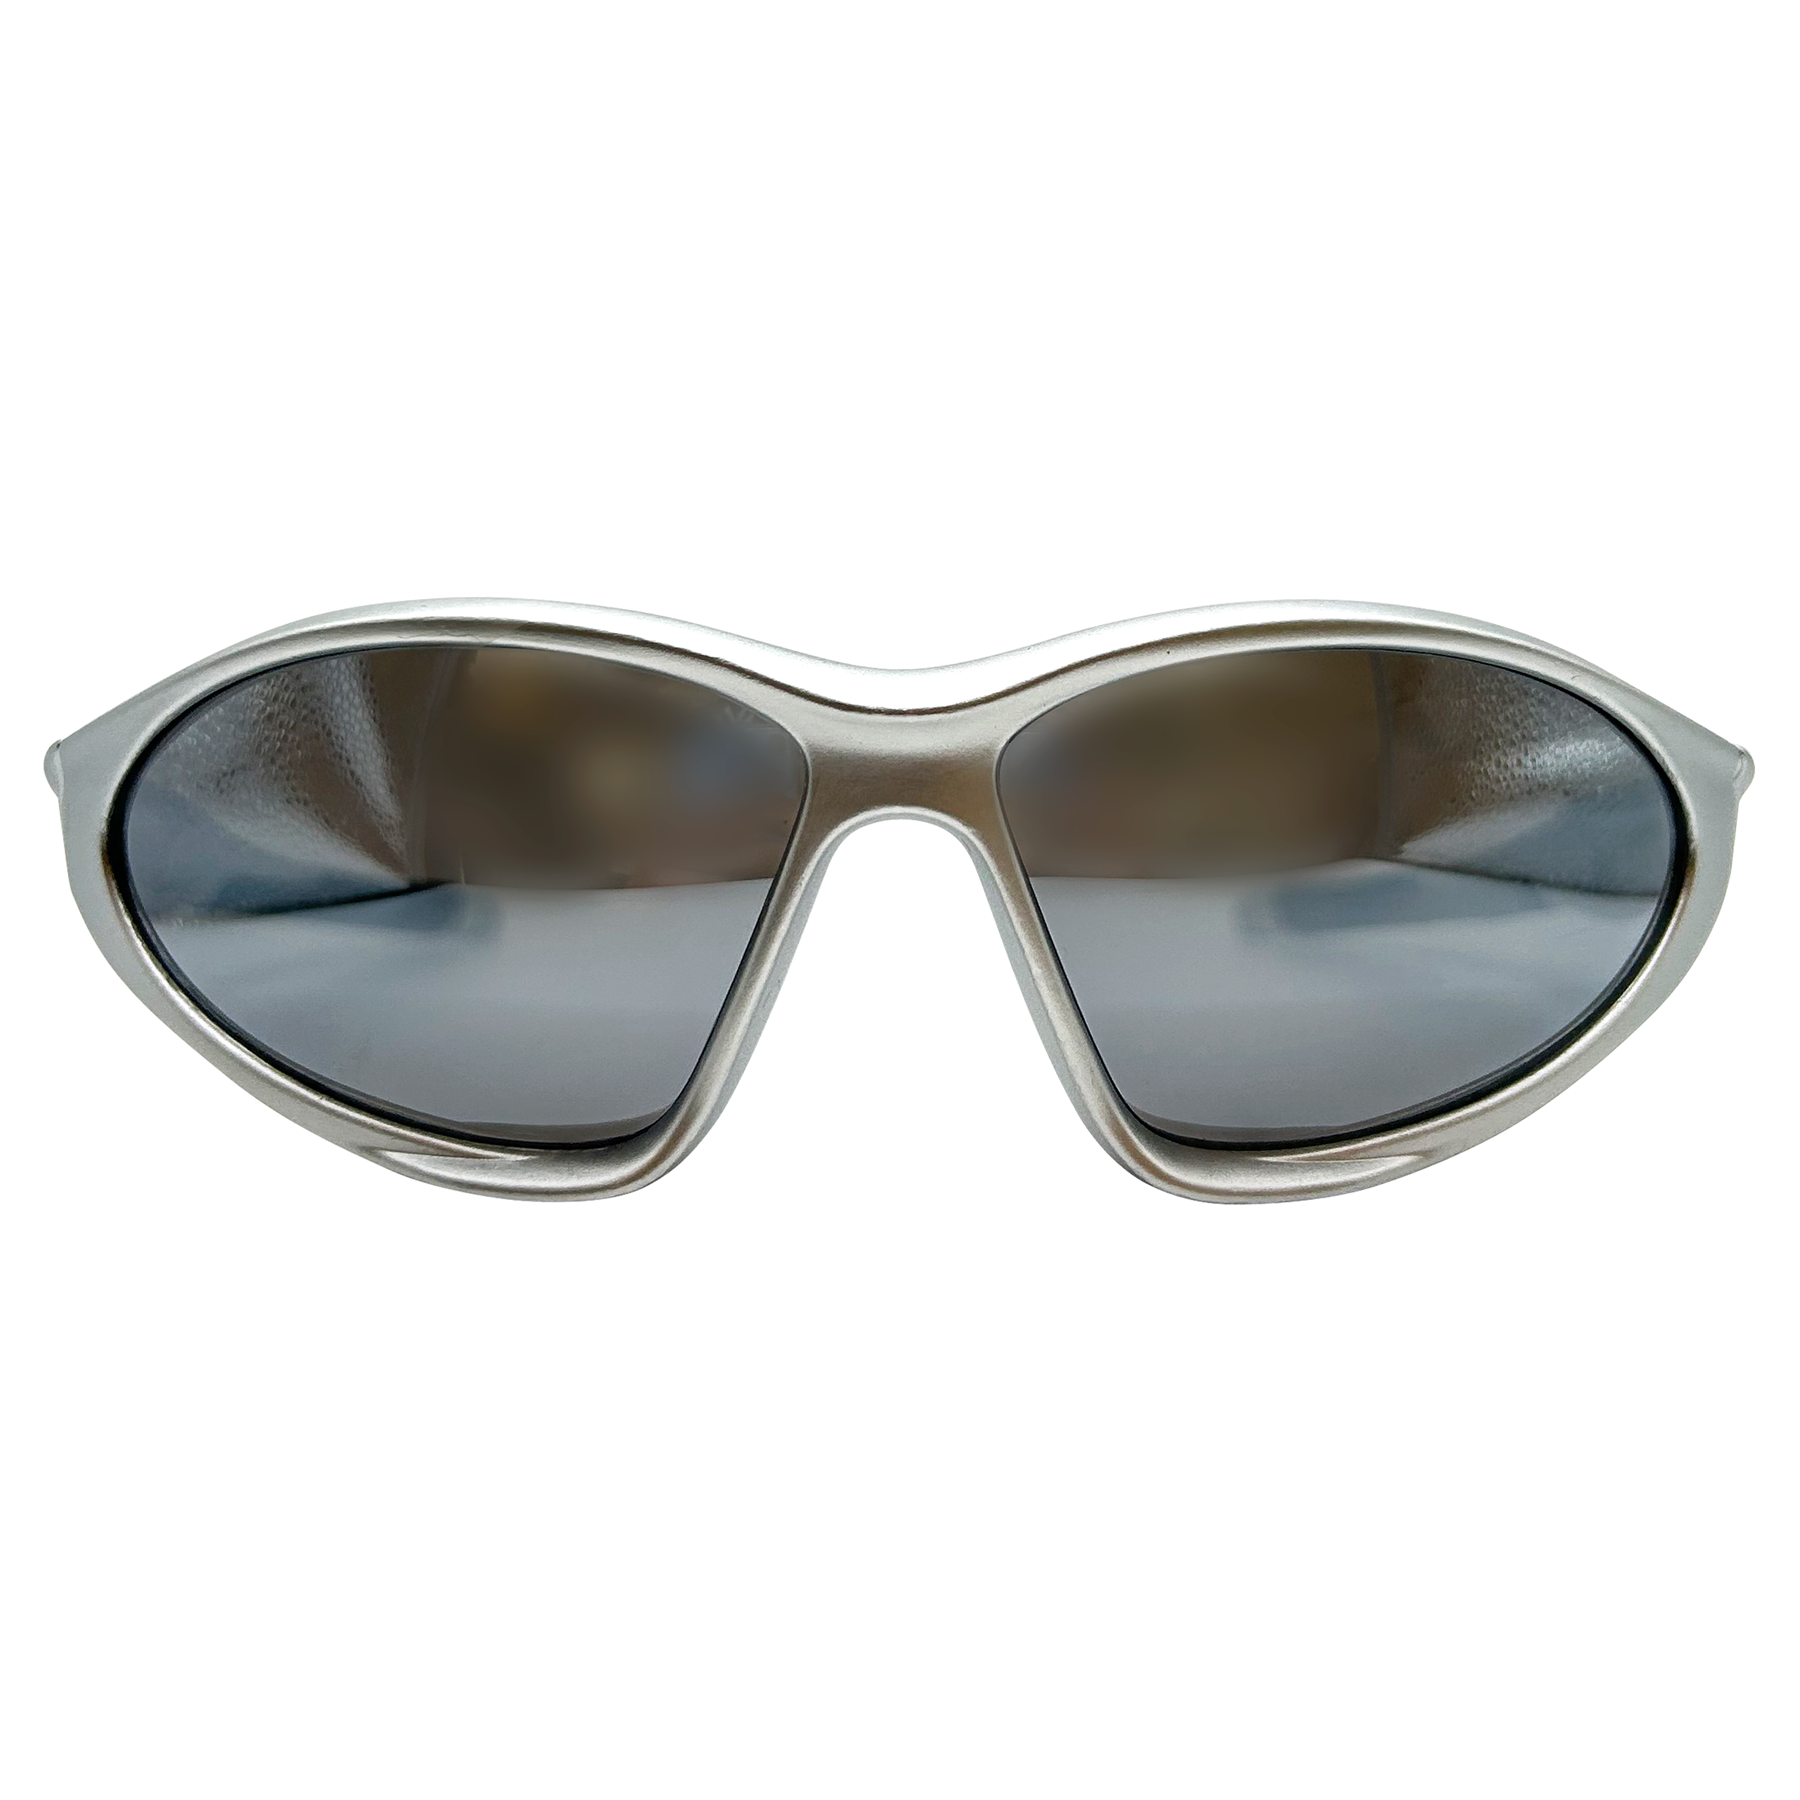 THE 110 Futuristic Sports Sunglasses